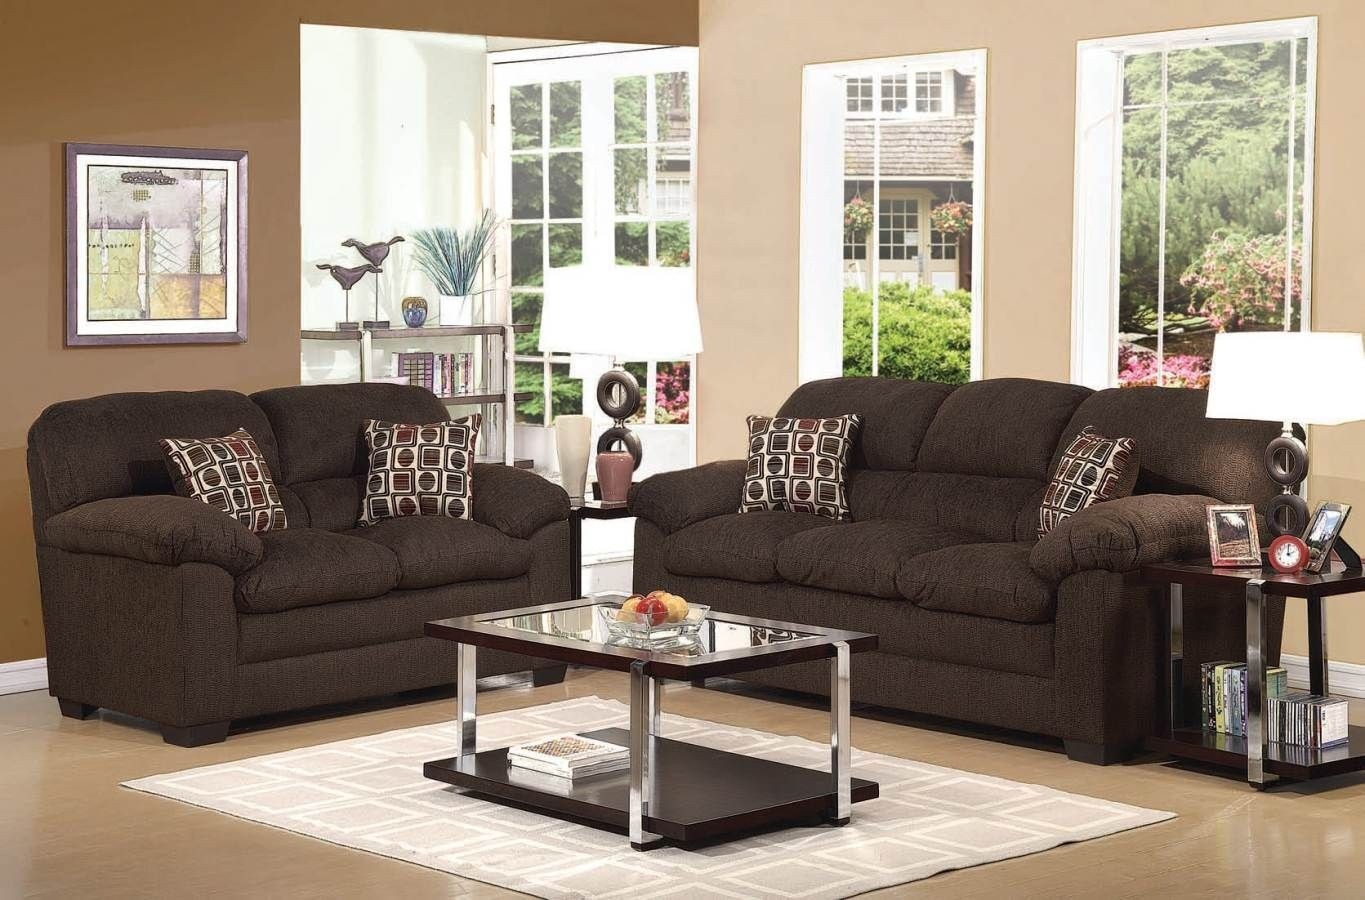 Maxine upholstery mocha chenille living room sets 50405